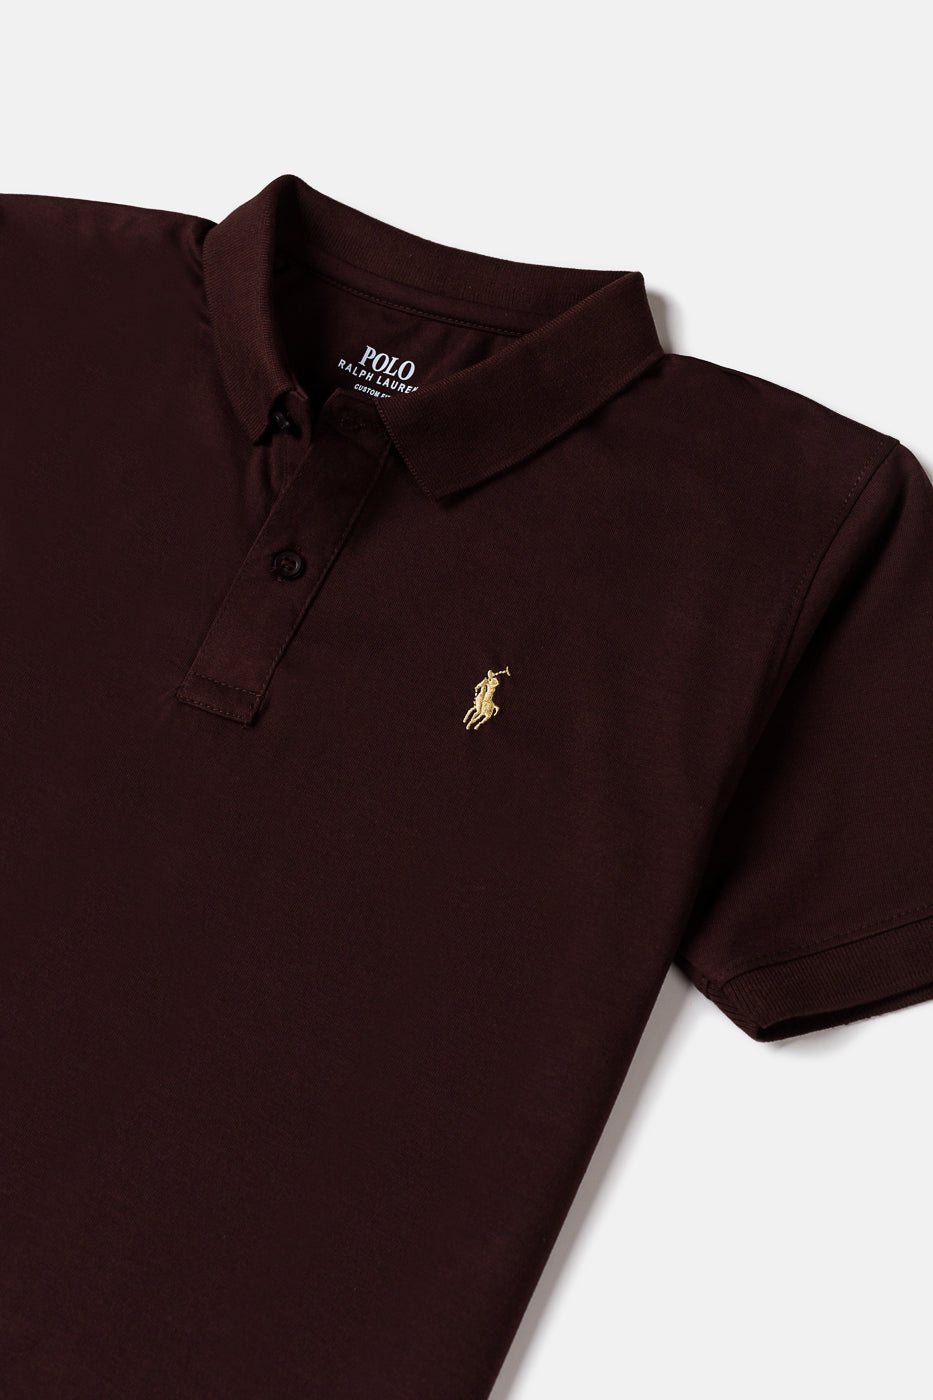 RL Premium Imported Polo Shirt - Burgundy